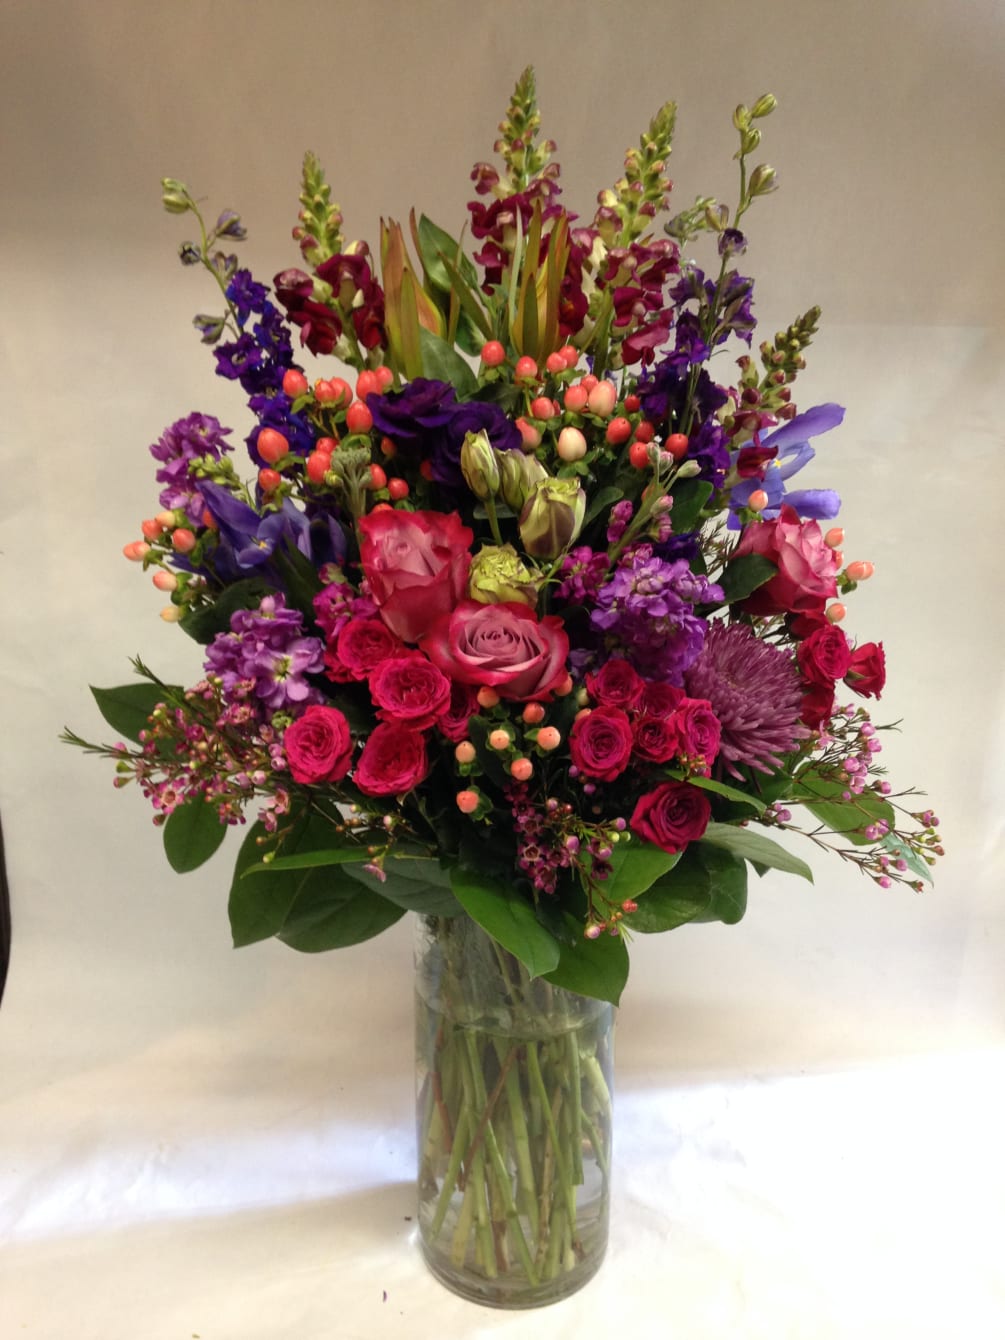 This large arrangement comes complete with lavender roses, snap dragons, lisianthus, belladonna